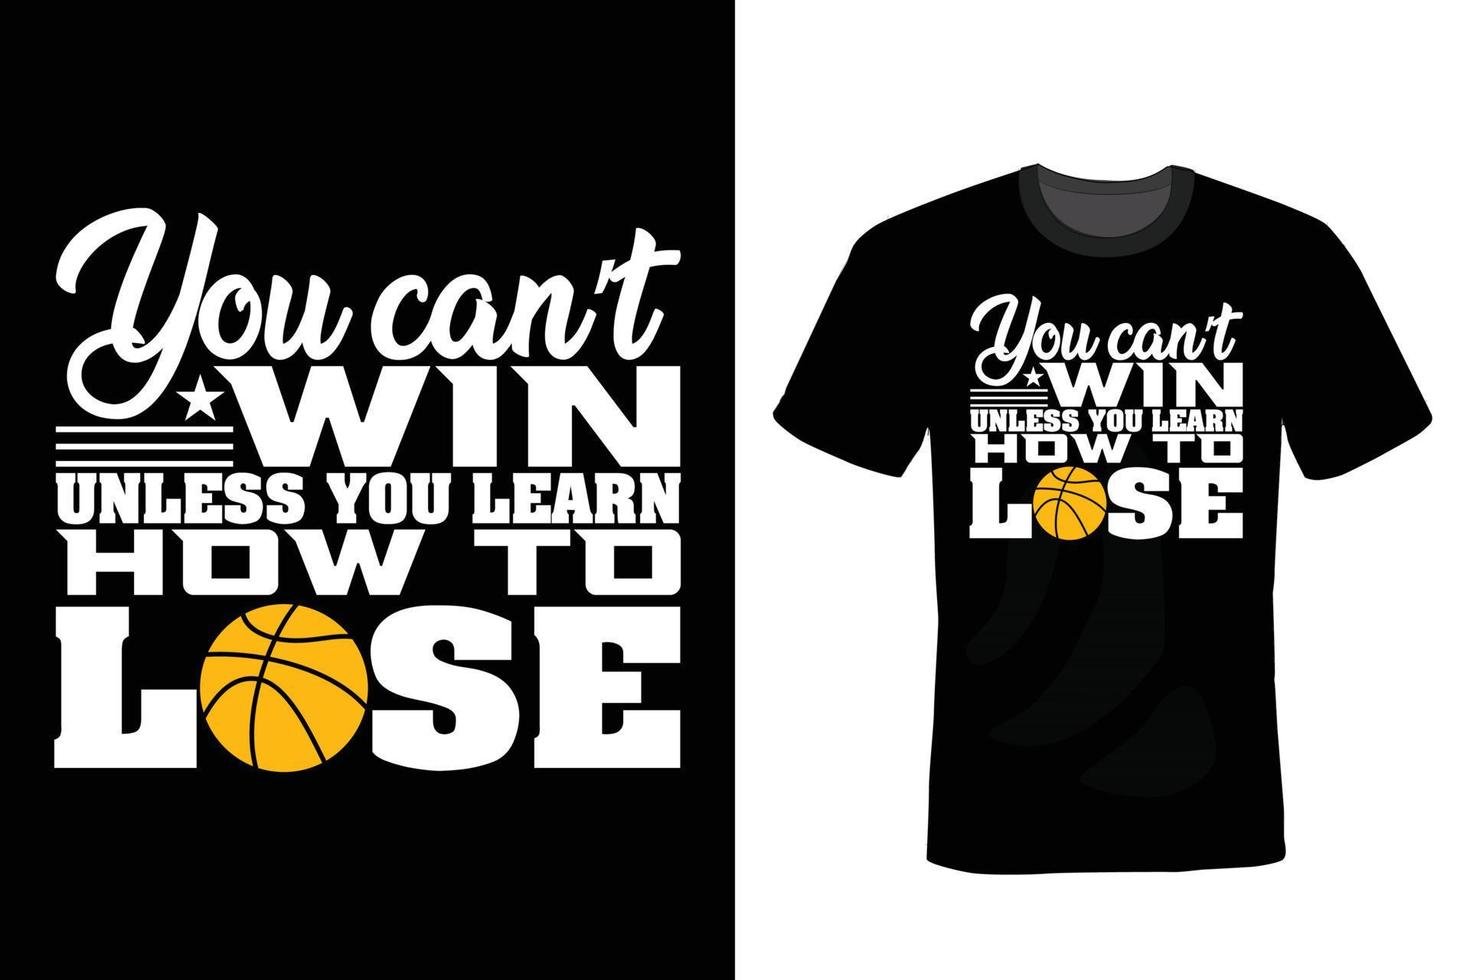 Basketball-T-Shirt-Design, Vintage, Typografie vektor